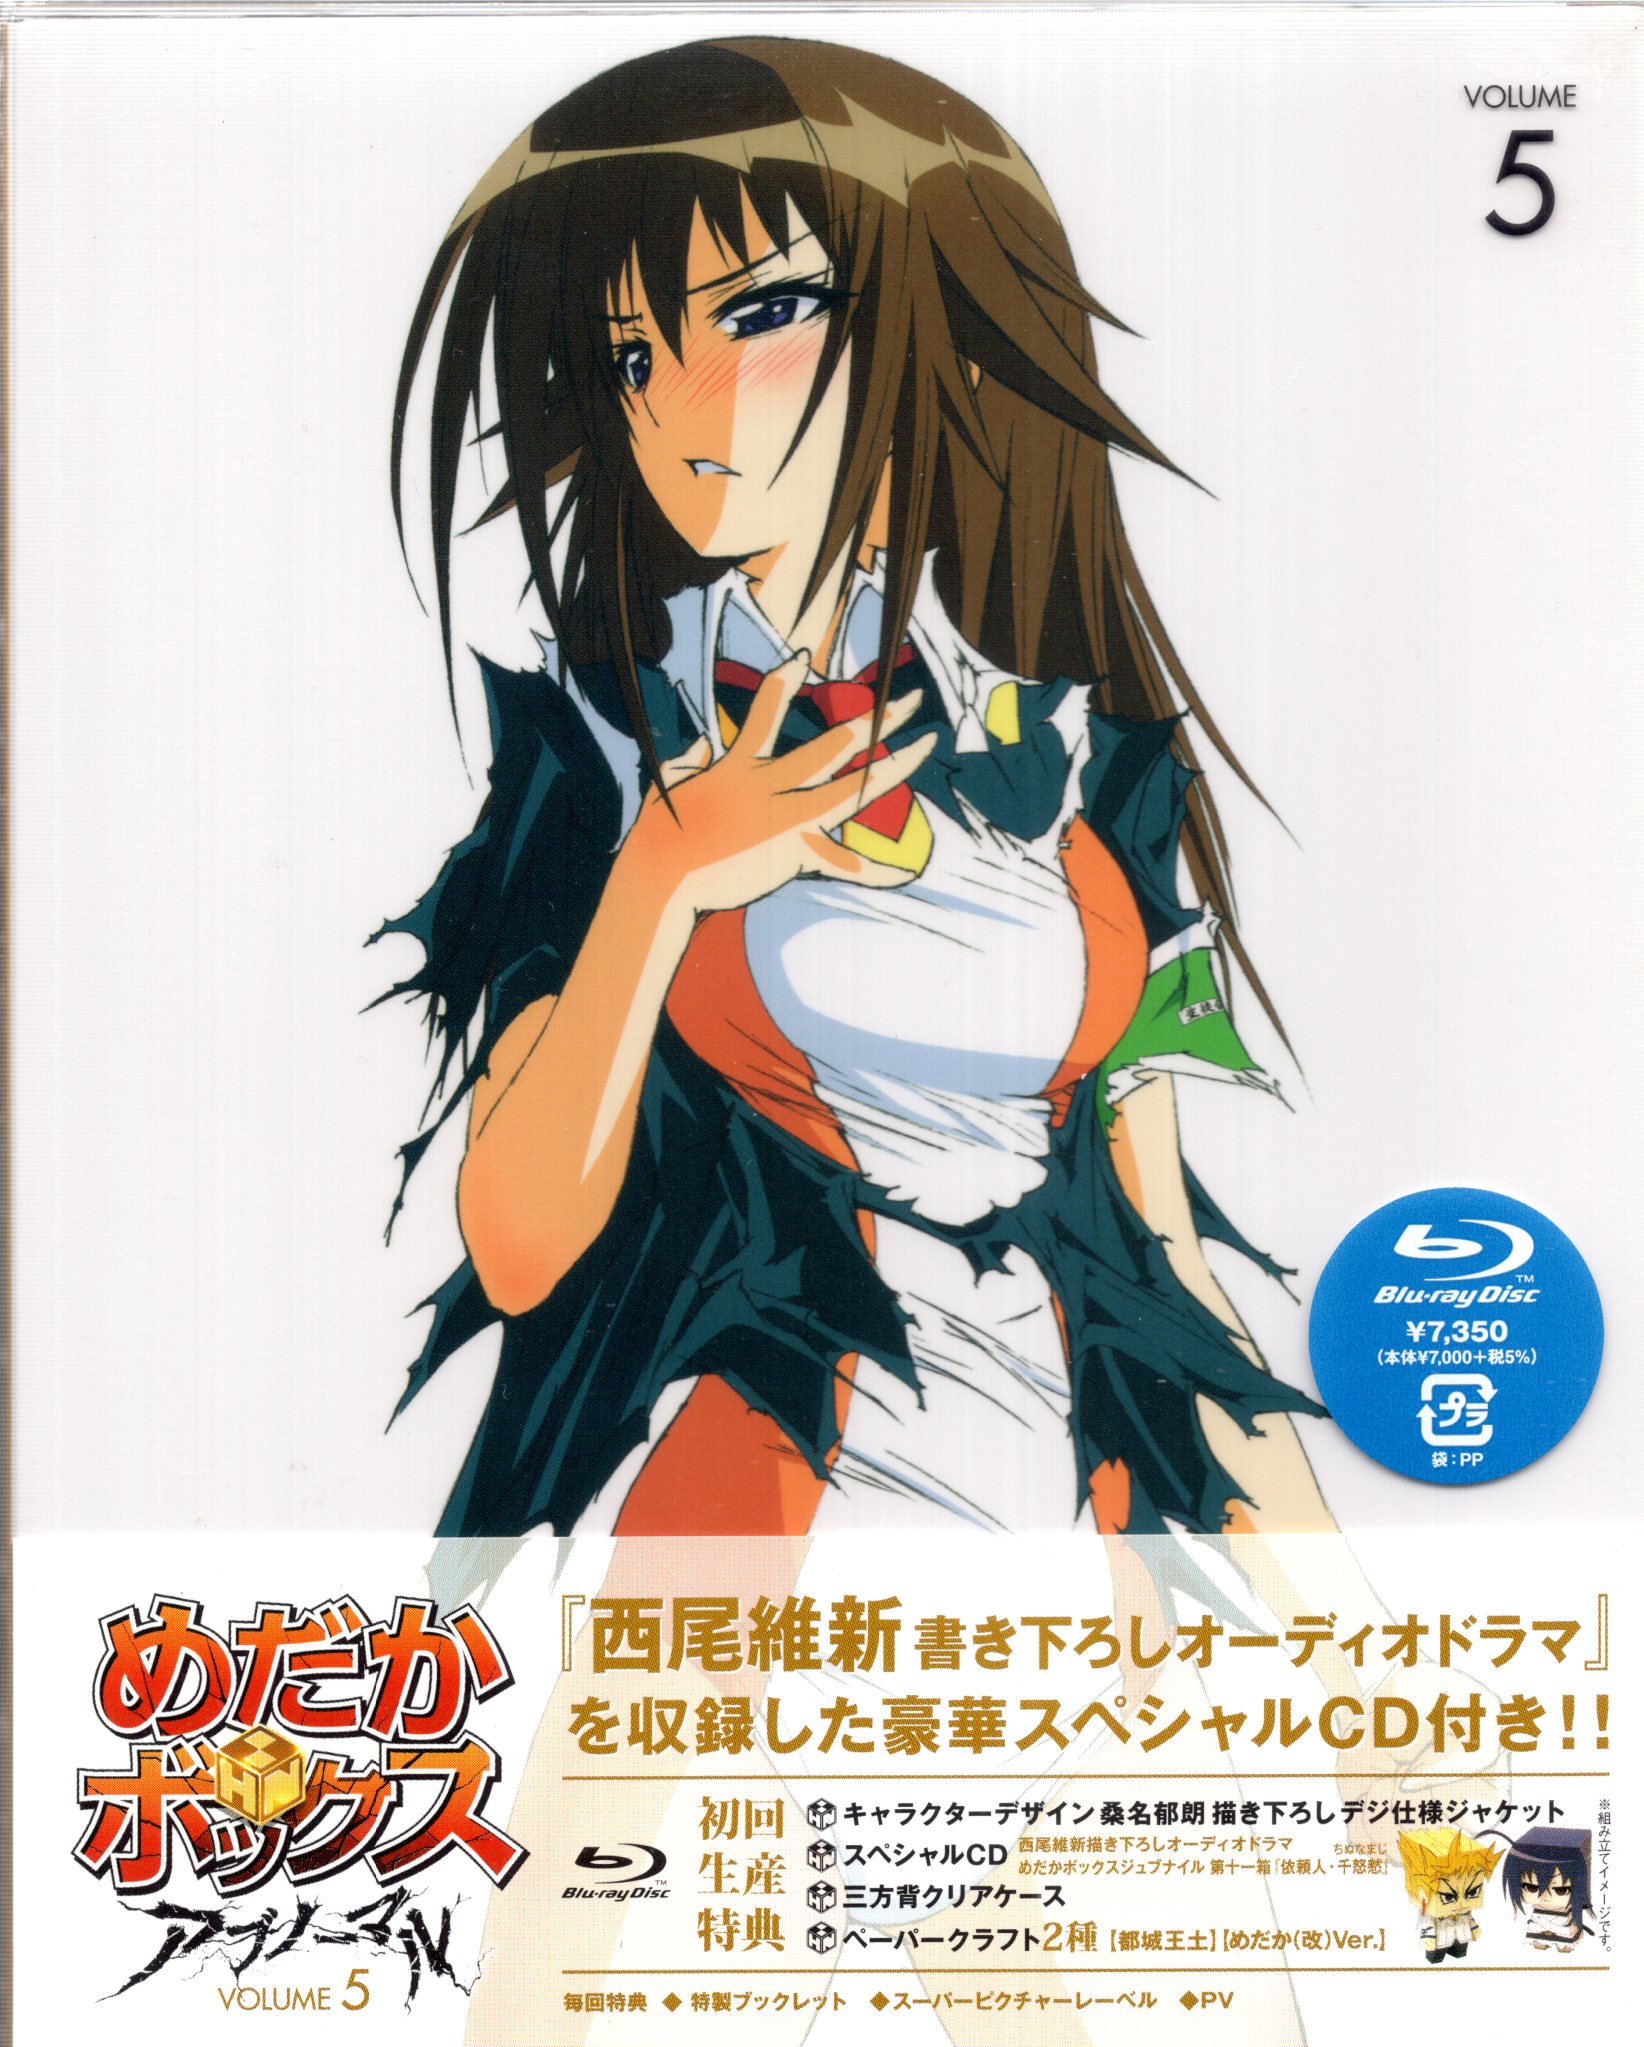 Anime Blu Ray First Edition Edition Medaka Box Abnormal 5 Unopened Mandarake Online Shop